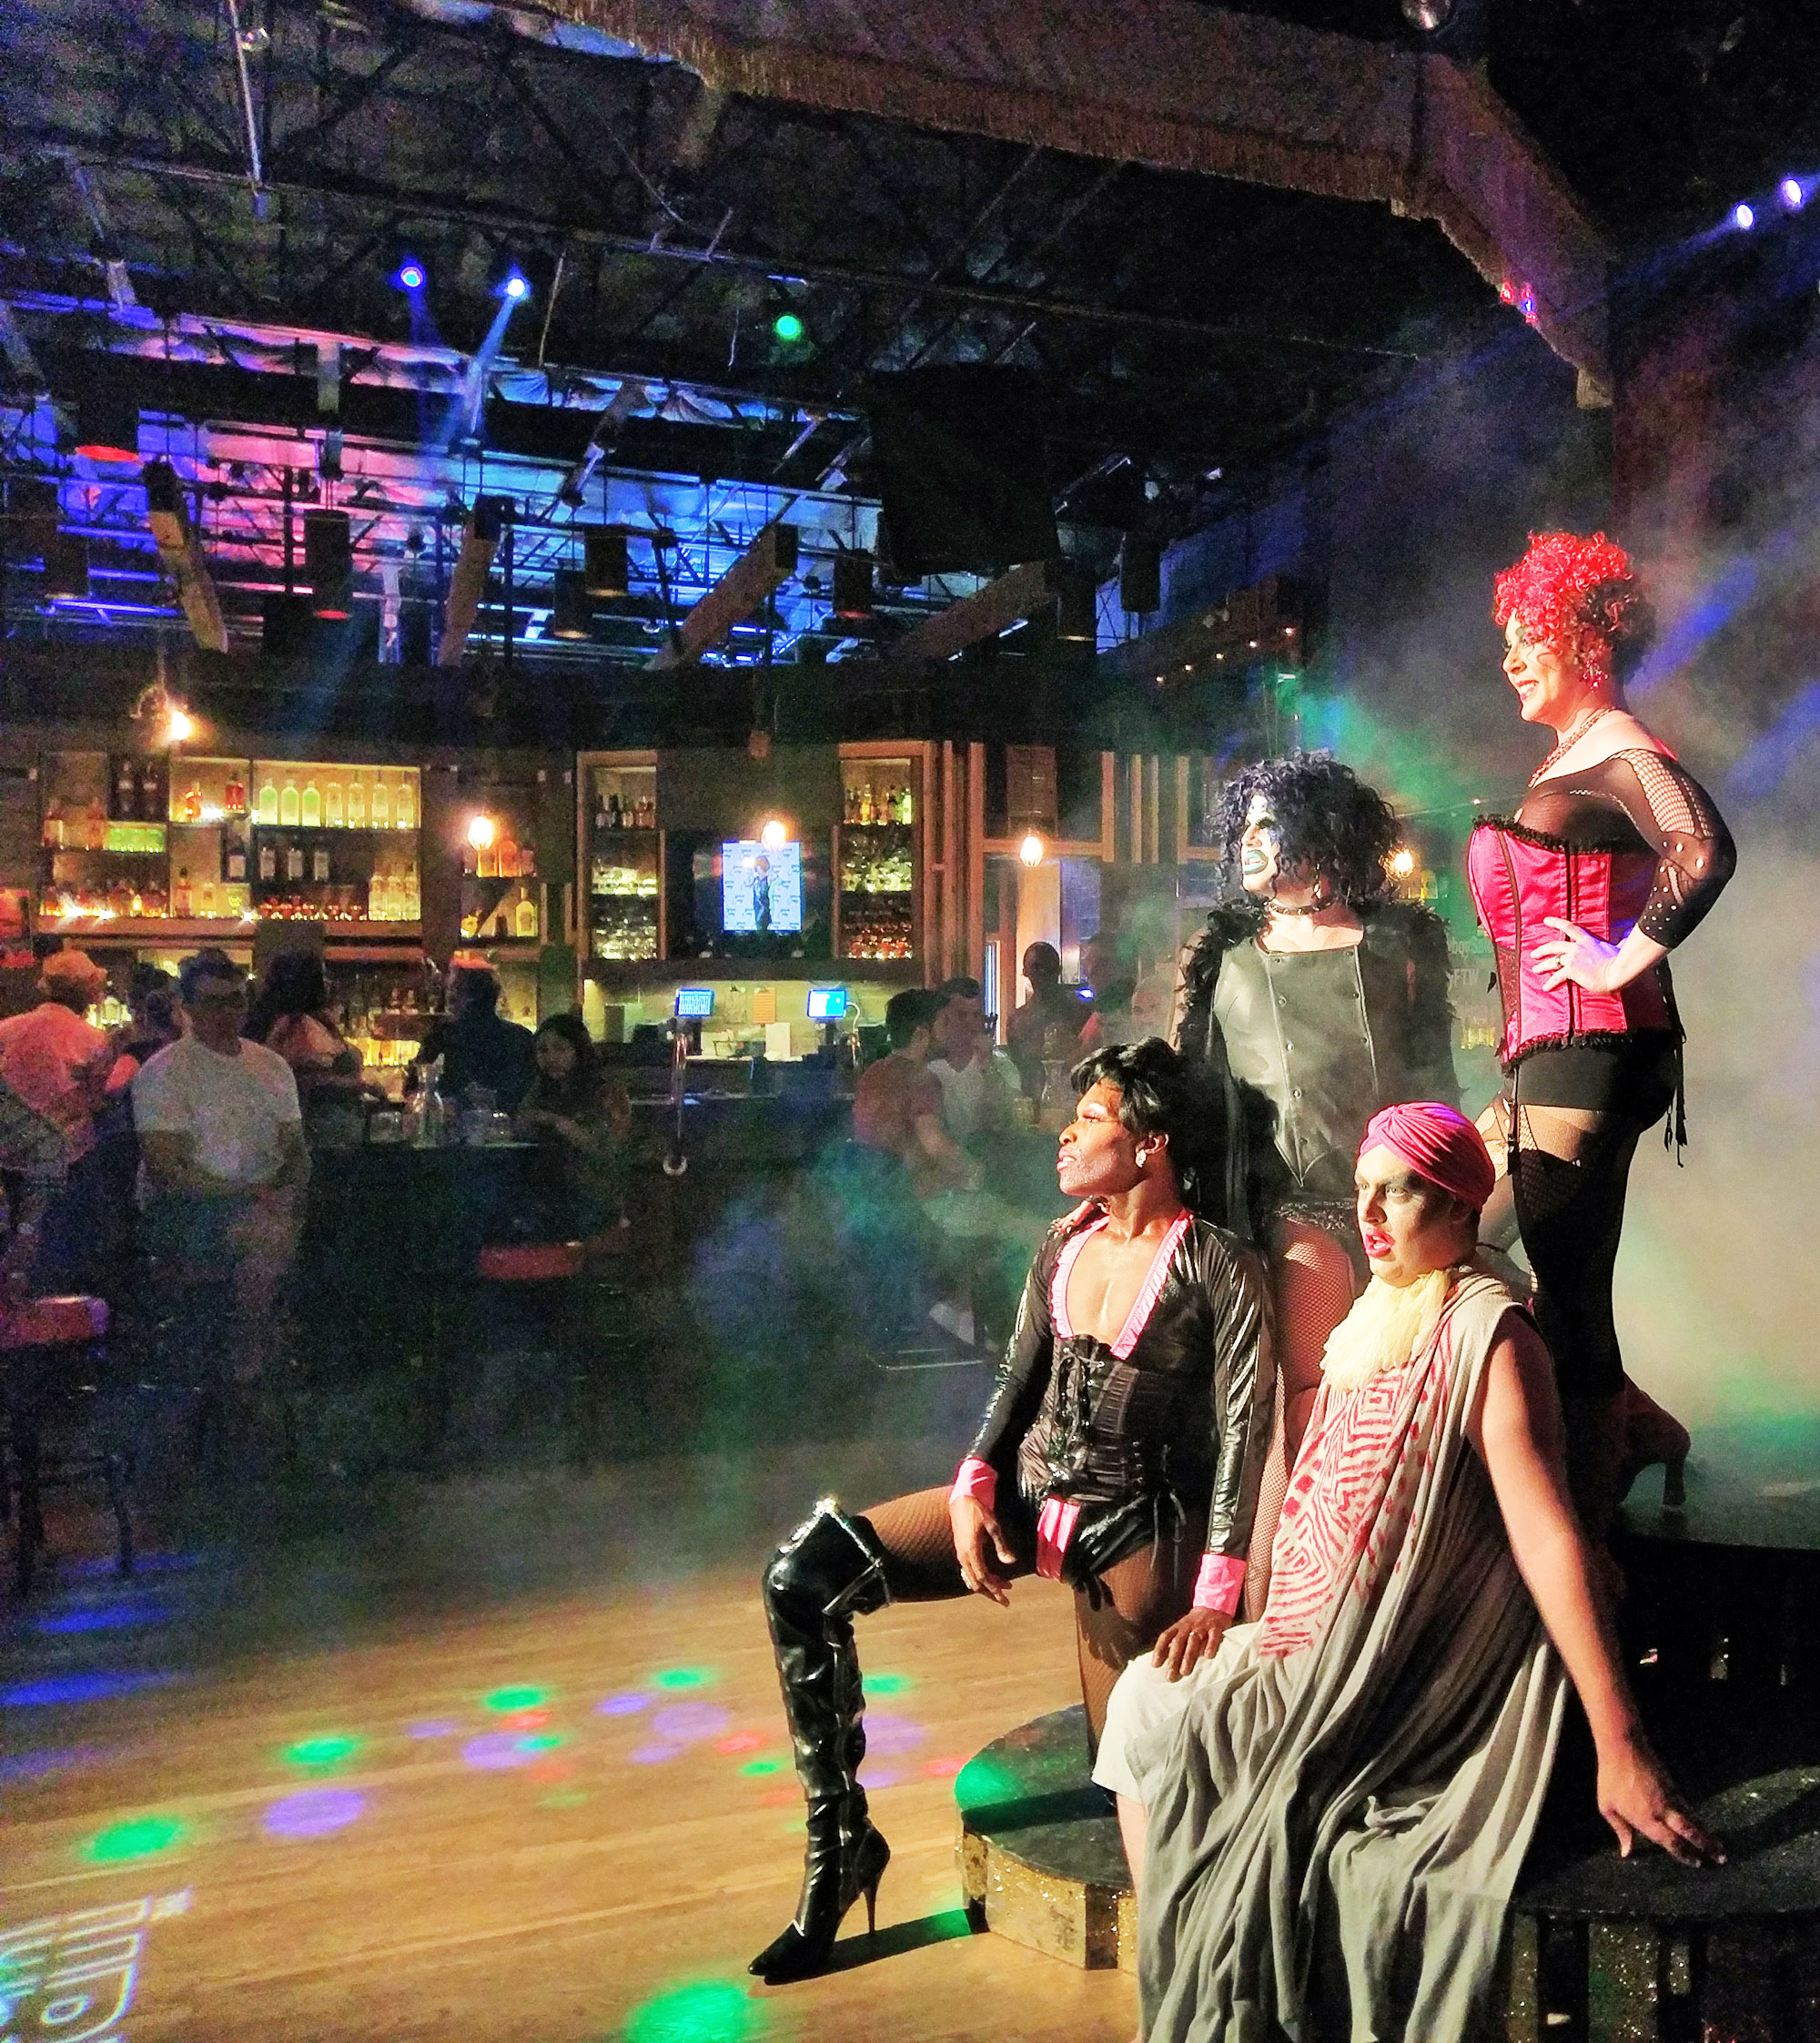 The drag brunch cast at Urban Cowboy Saloon, Fort Worth, TX.